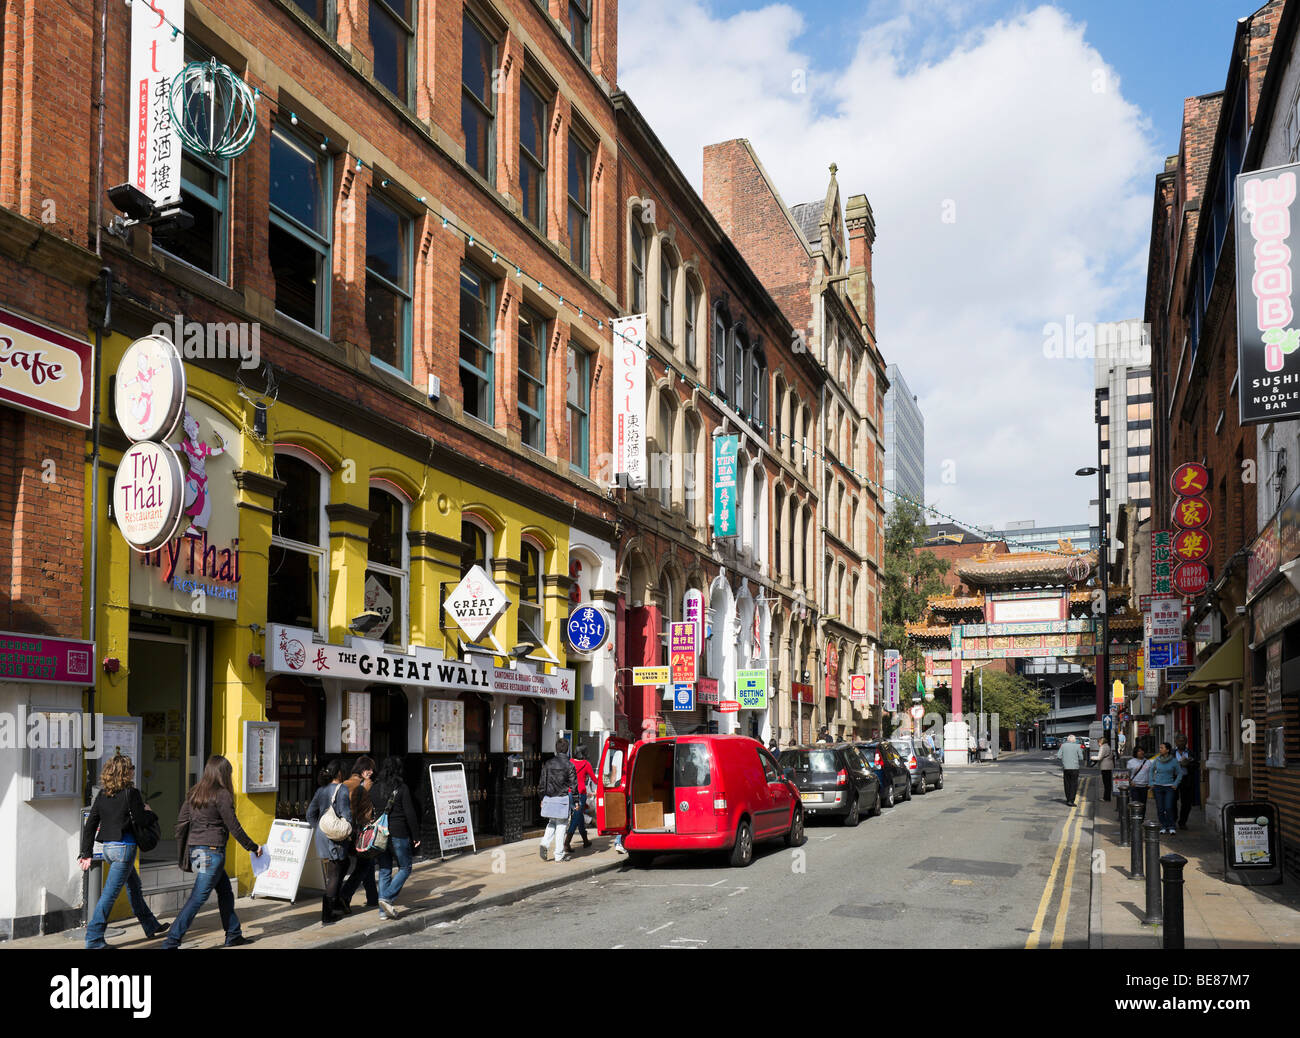 Ristoranti orientali su Faulkner Street a Chinatown, Manchester, Inghilterra Foto Stock